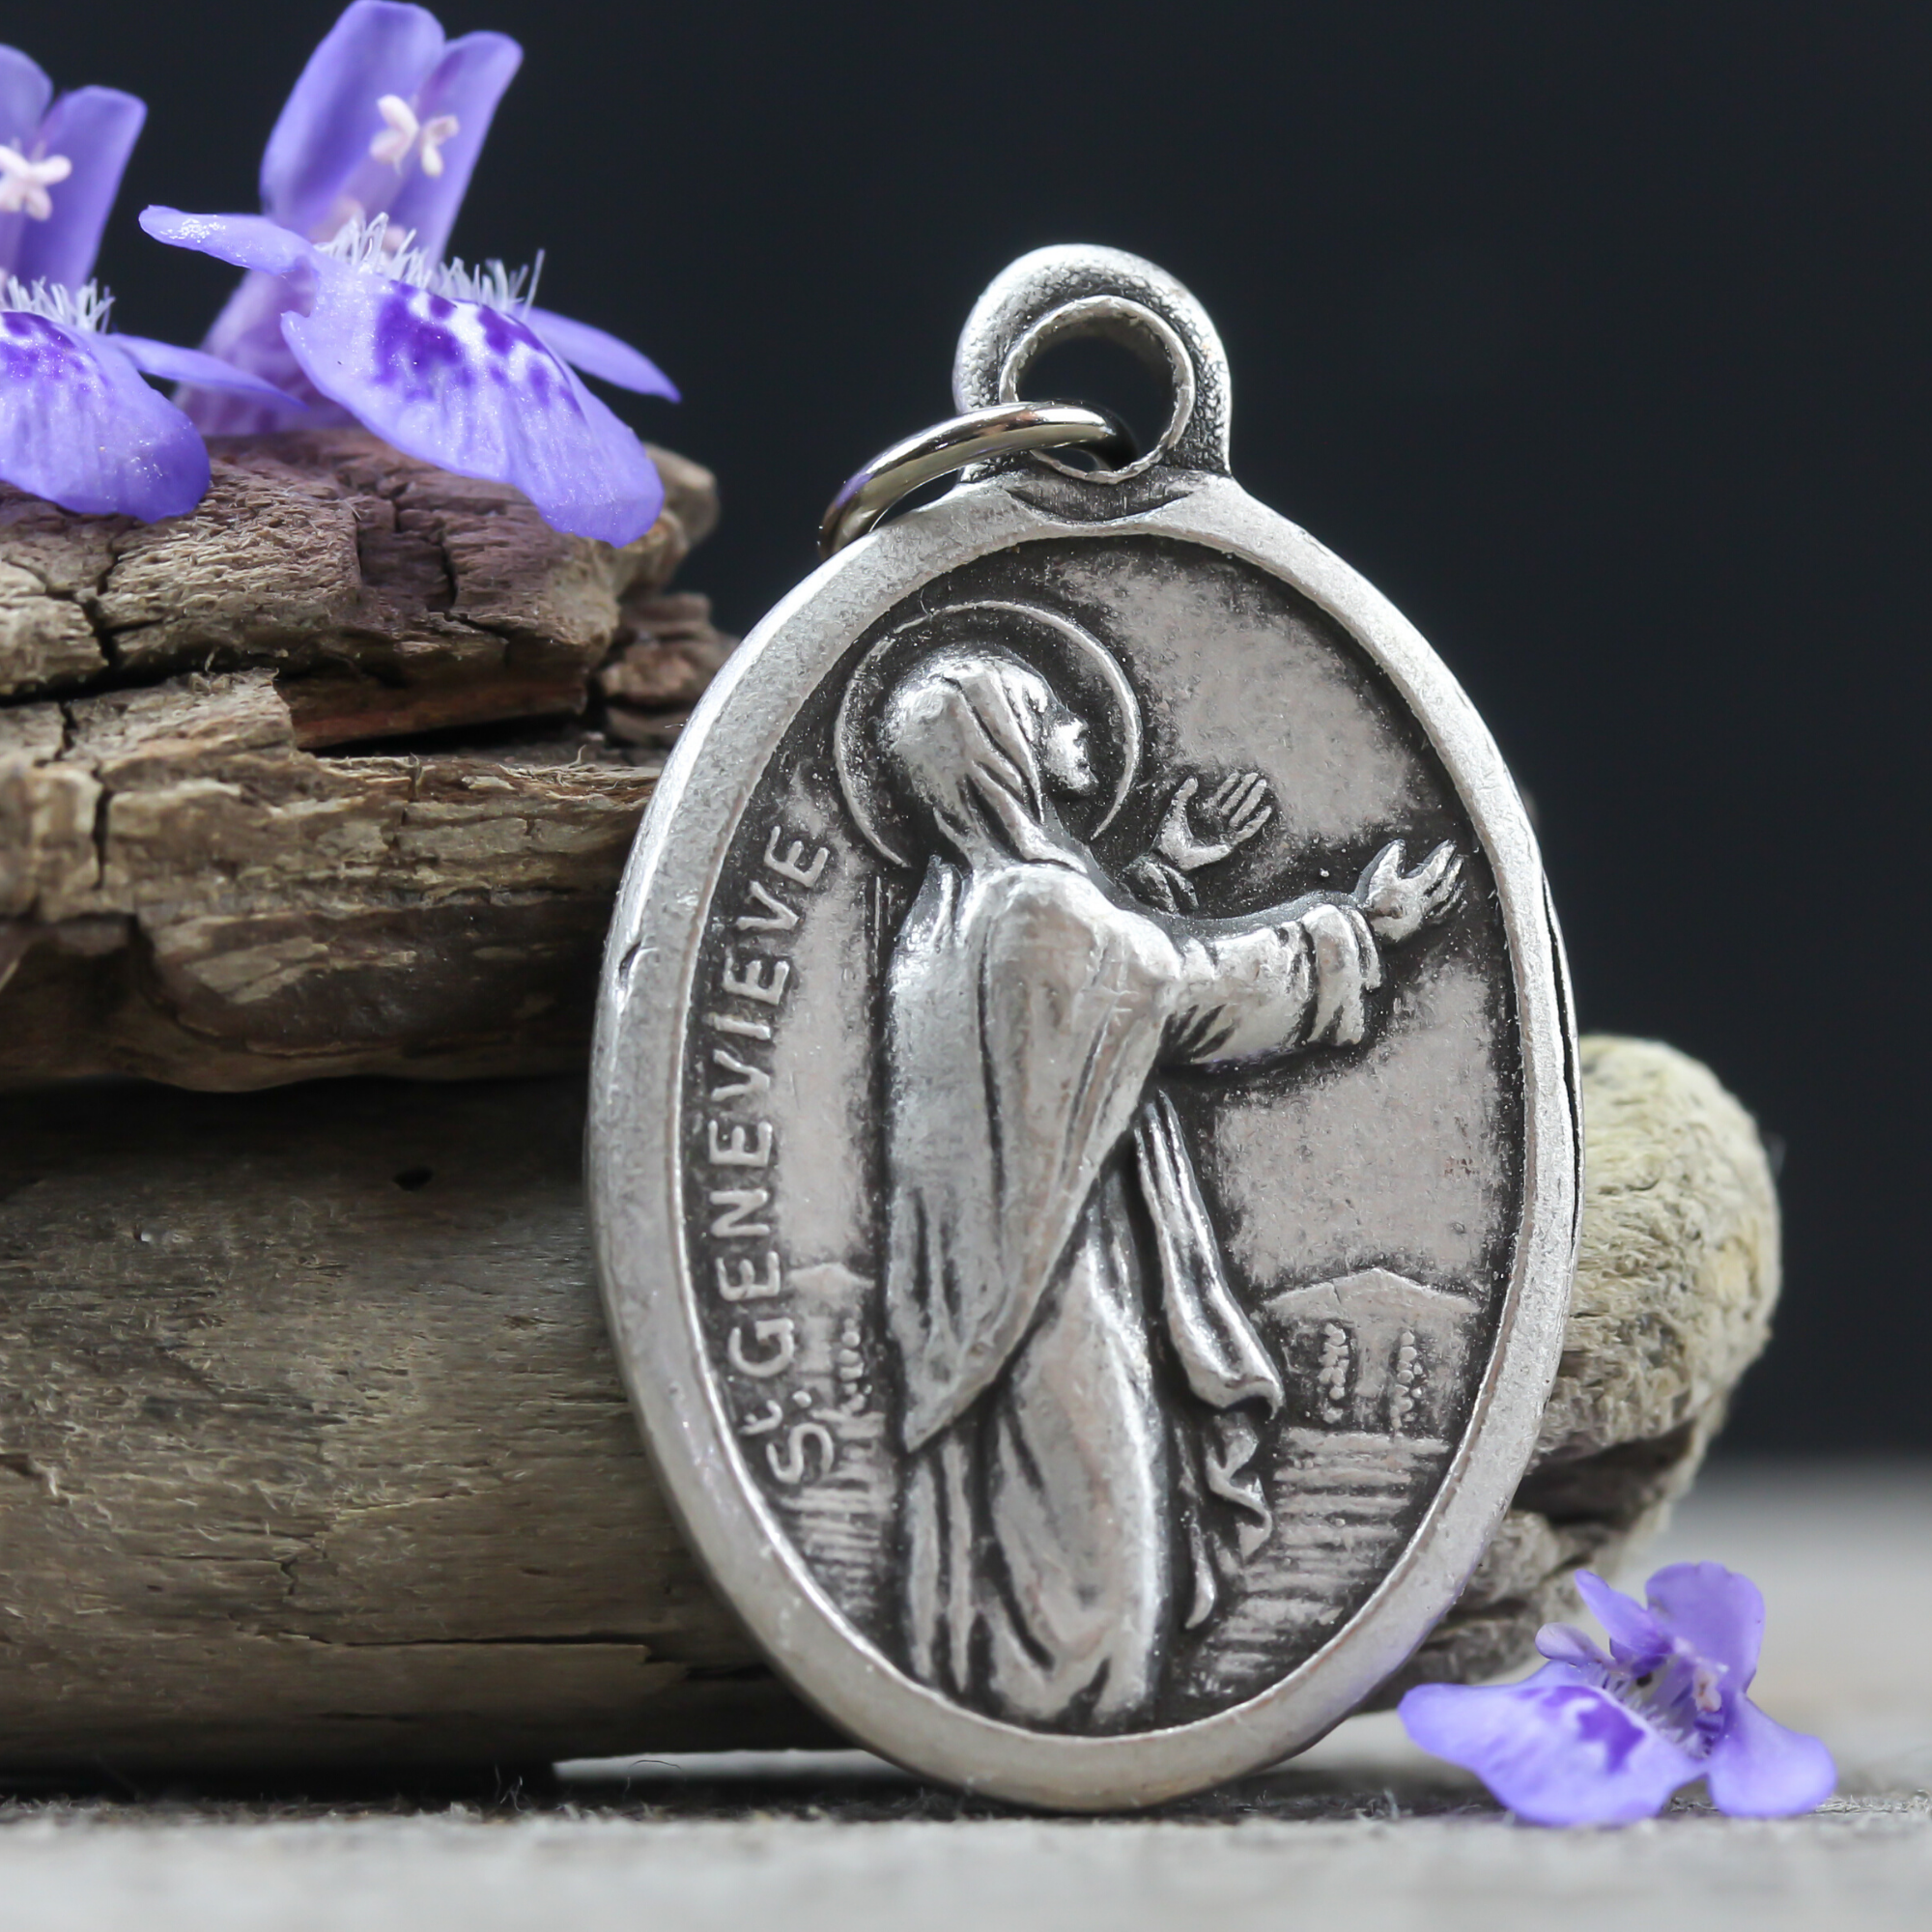 die cast silver tone medal depicting Saint Genevieve